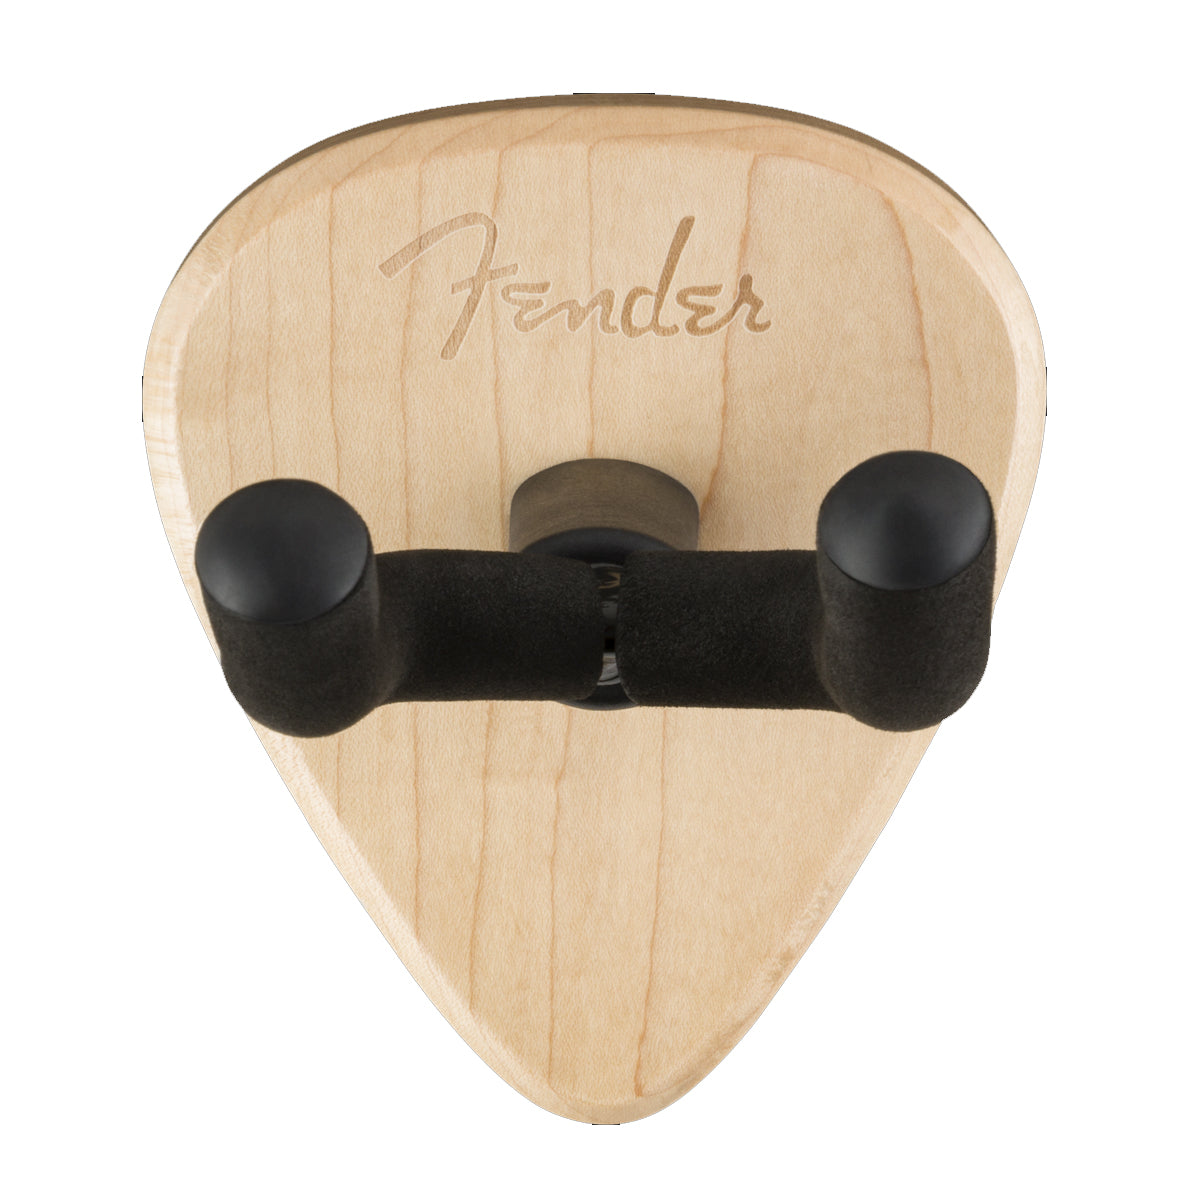 Fender 351 Wall Hanger Guitar Stand Maple - 0991803021